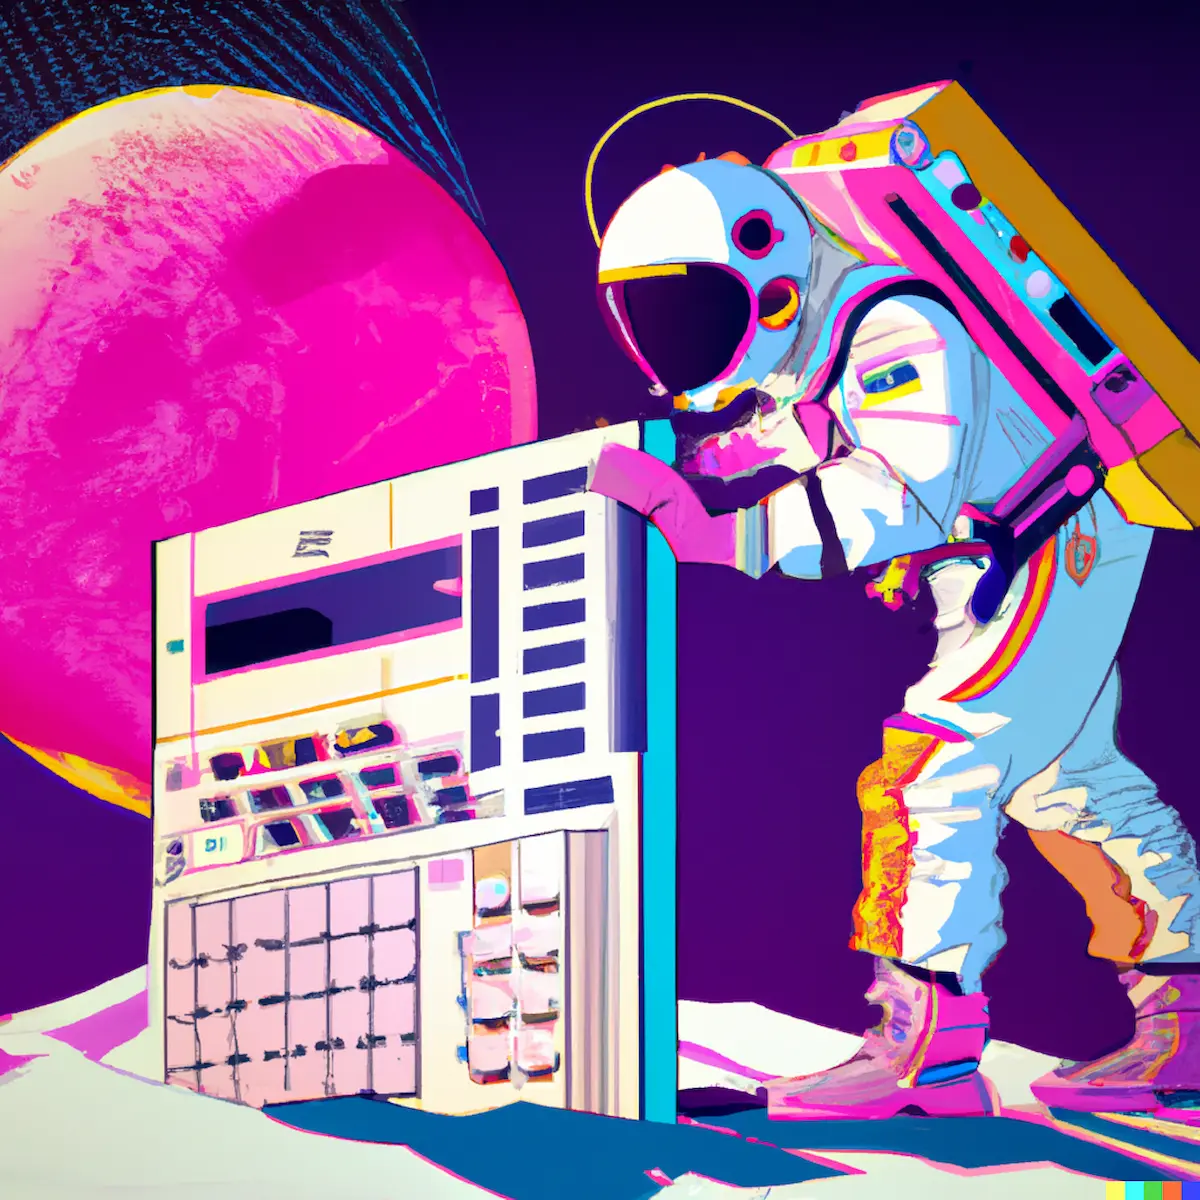 Astronaut walking on moon with calculator